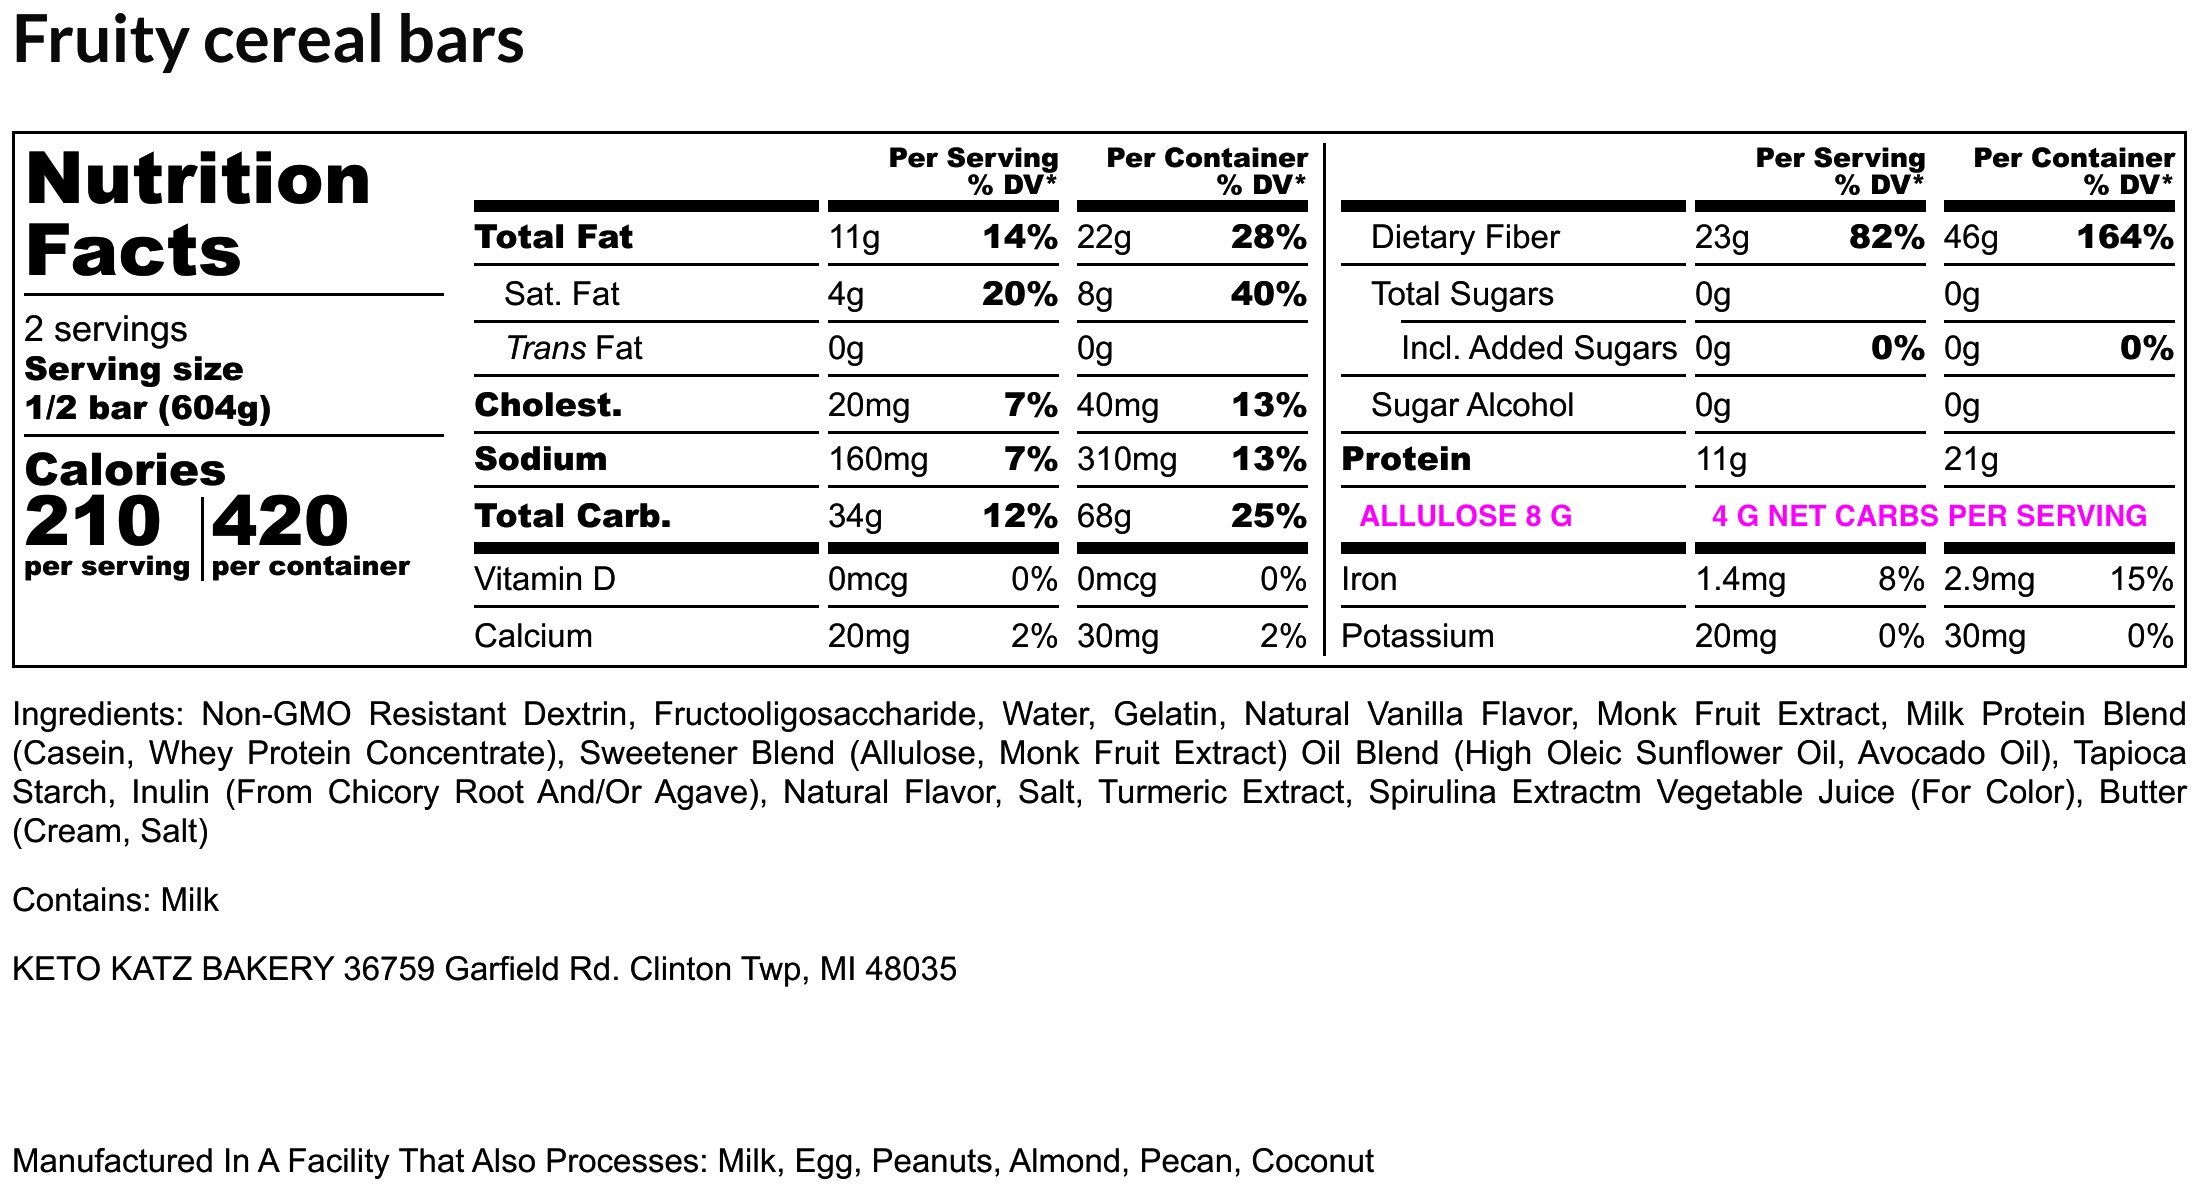 Fruity cereal bars - Nutrition Label copy.jpg